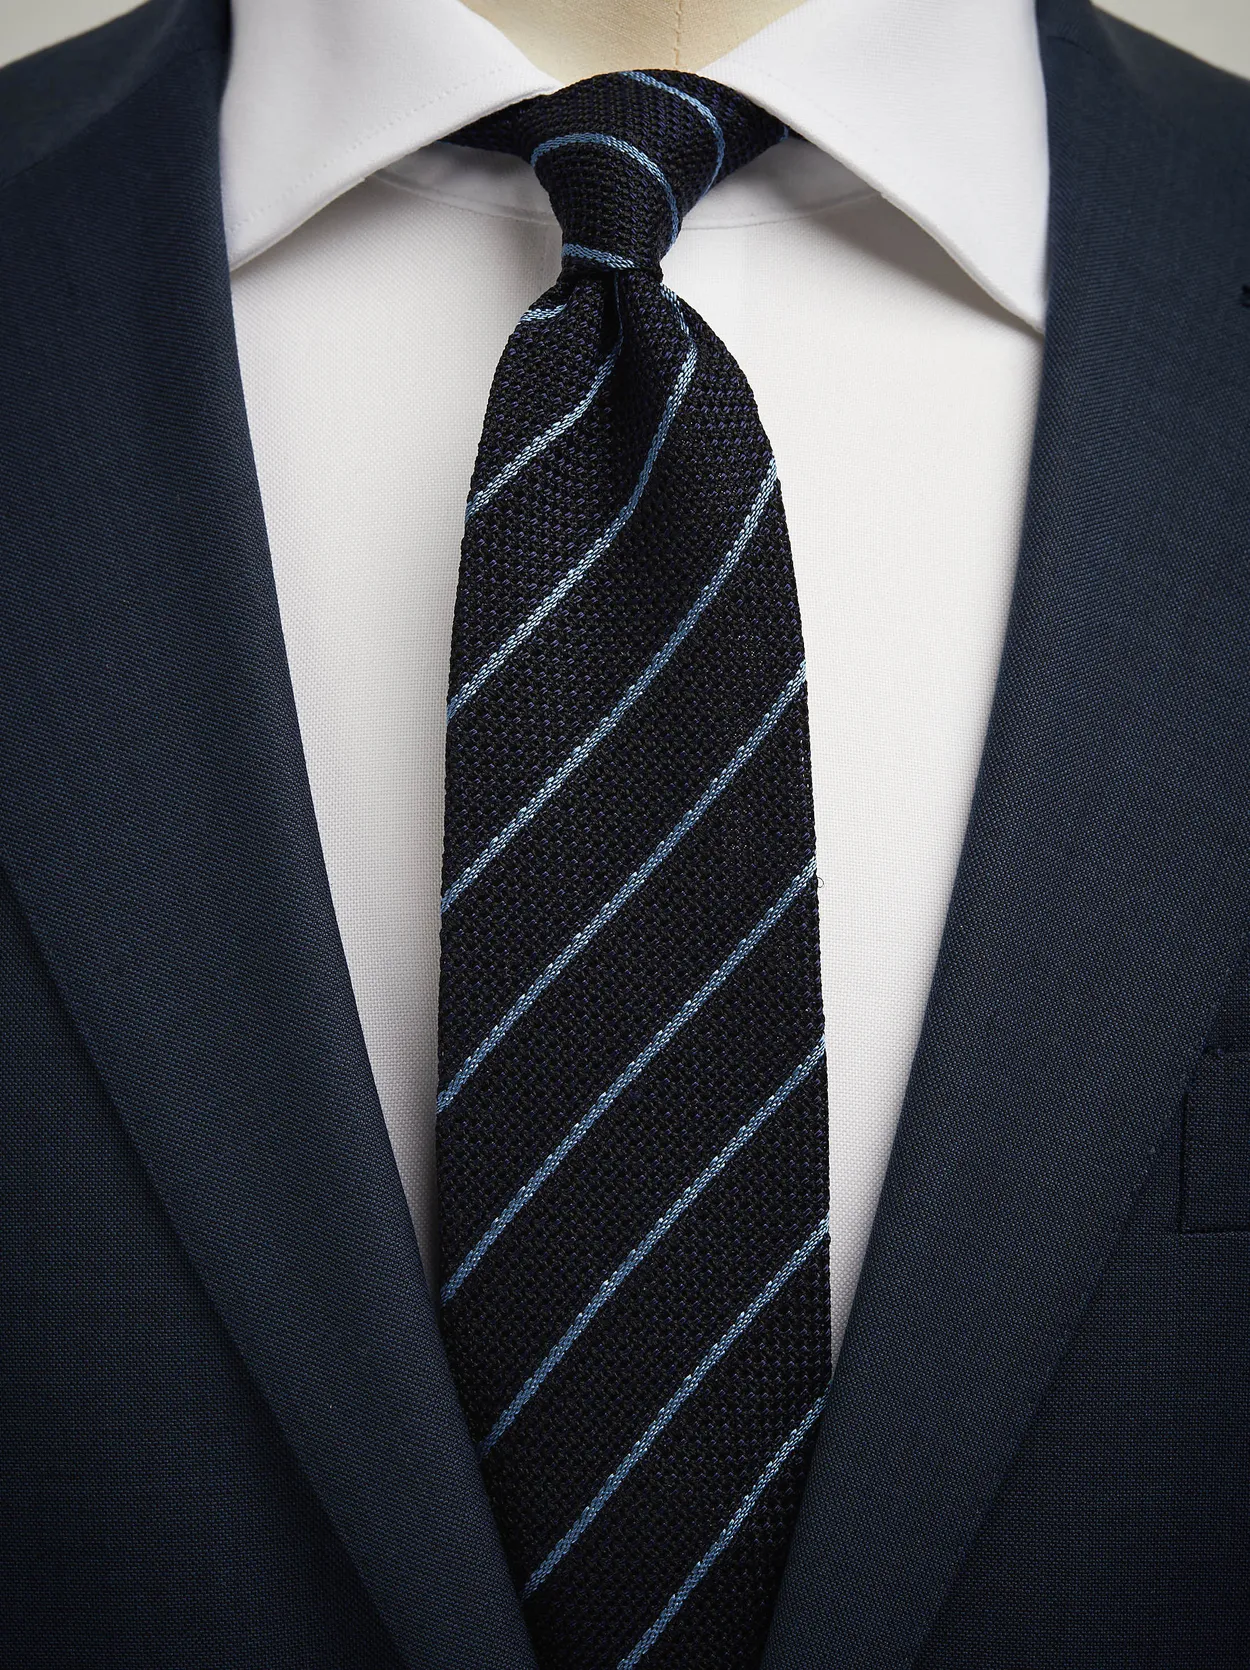 Blue Grenadine Tie